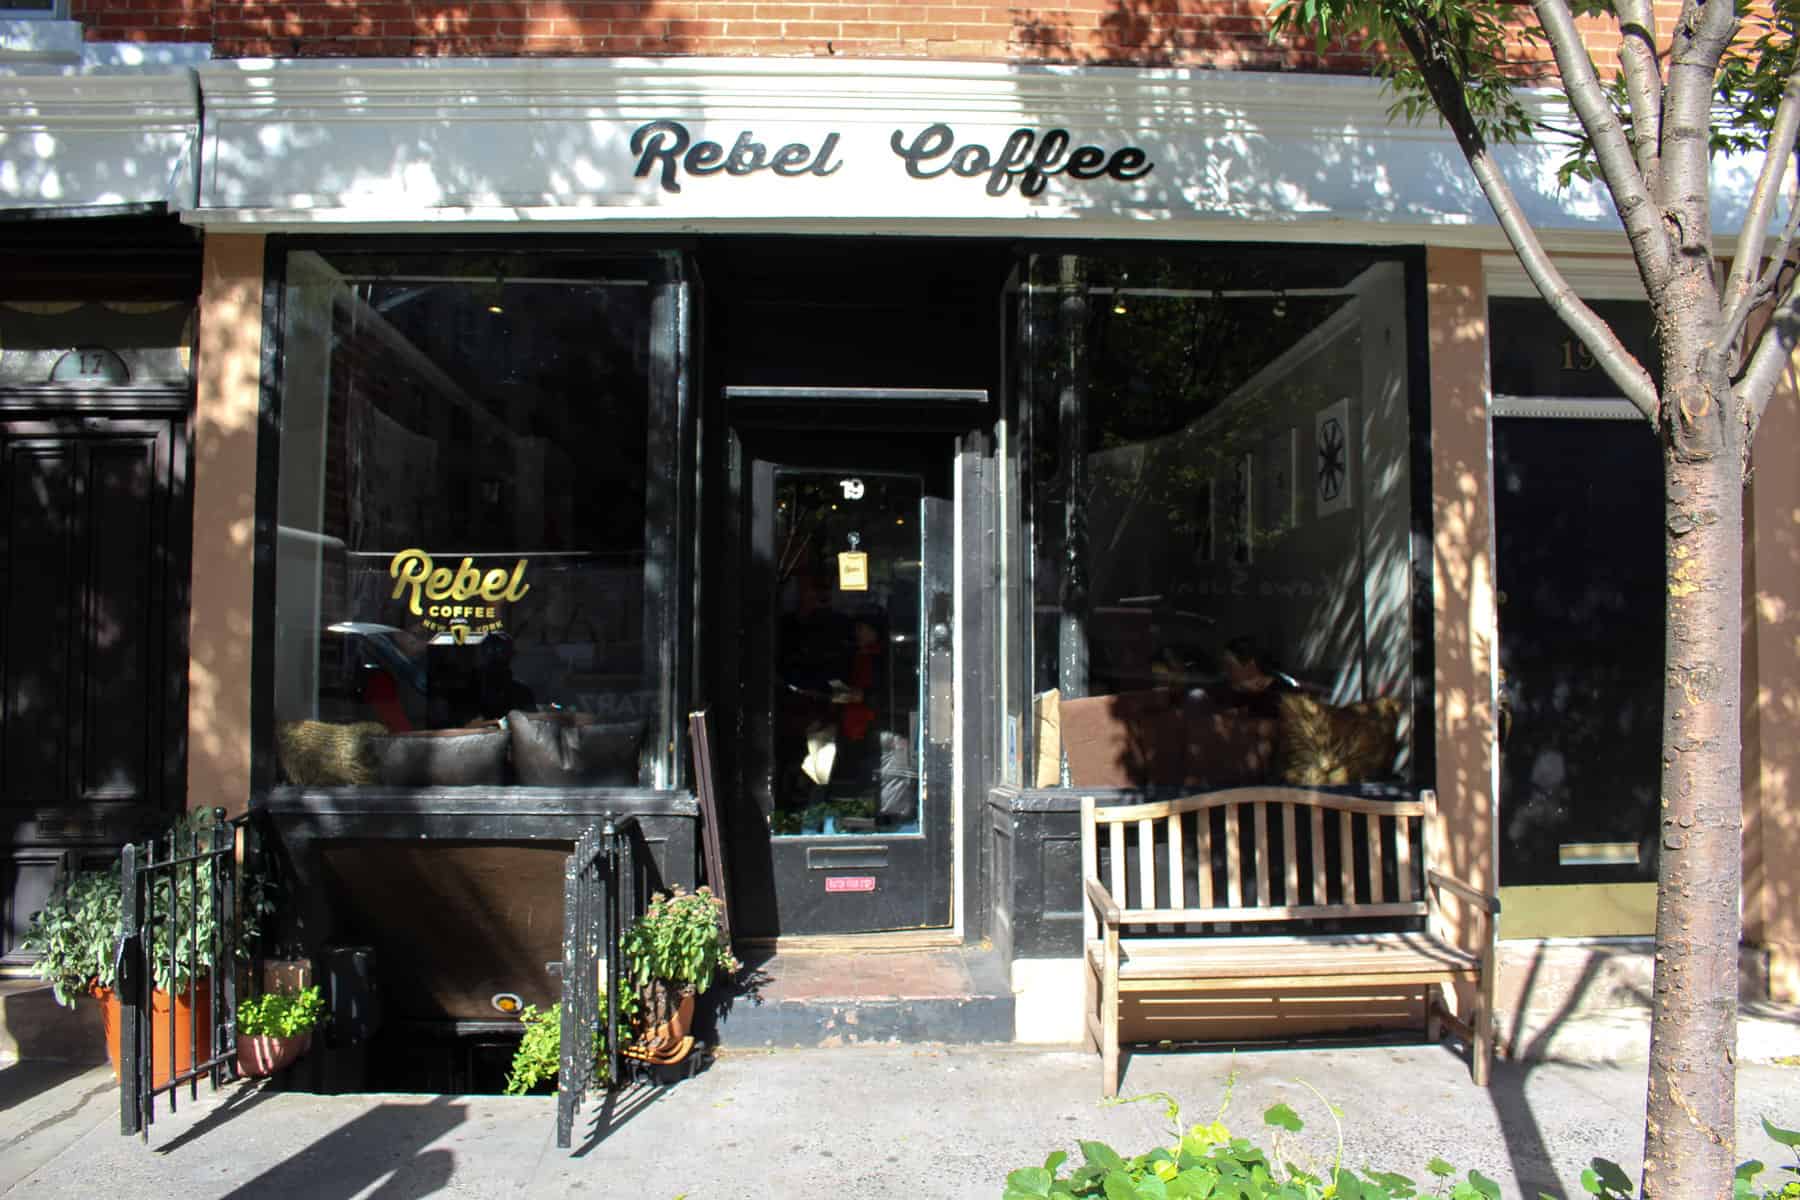 Rebel Coffee Shop